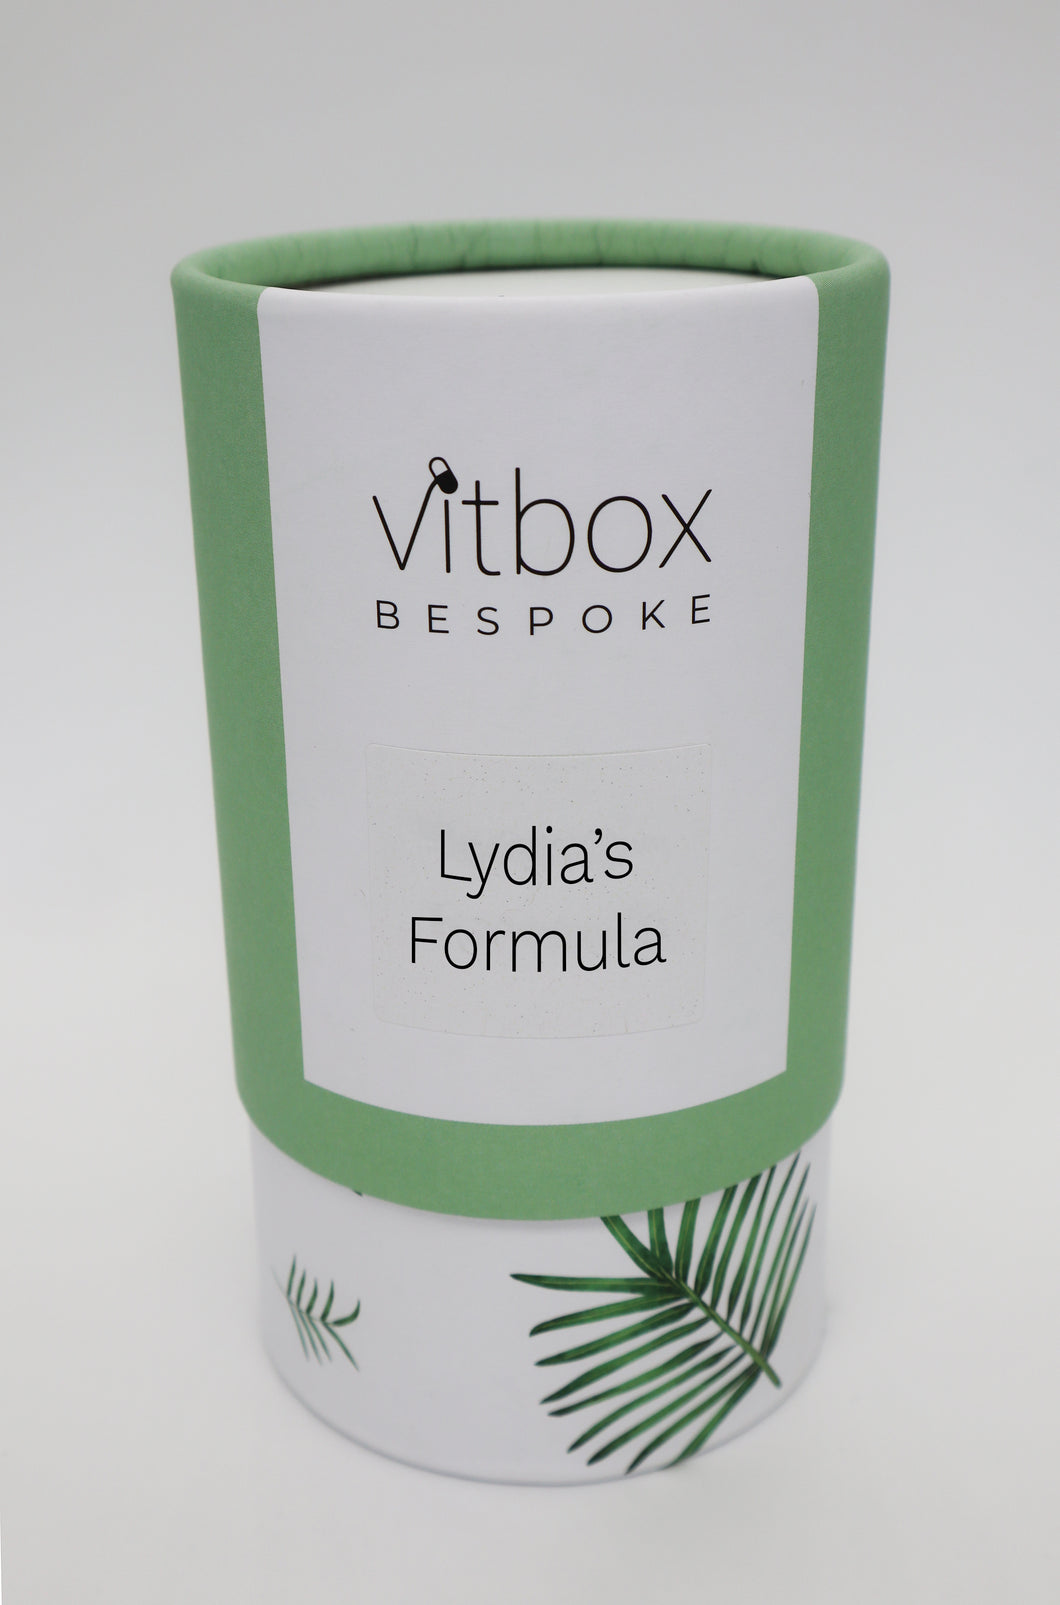 Lydia's Vitbox Bespoke